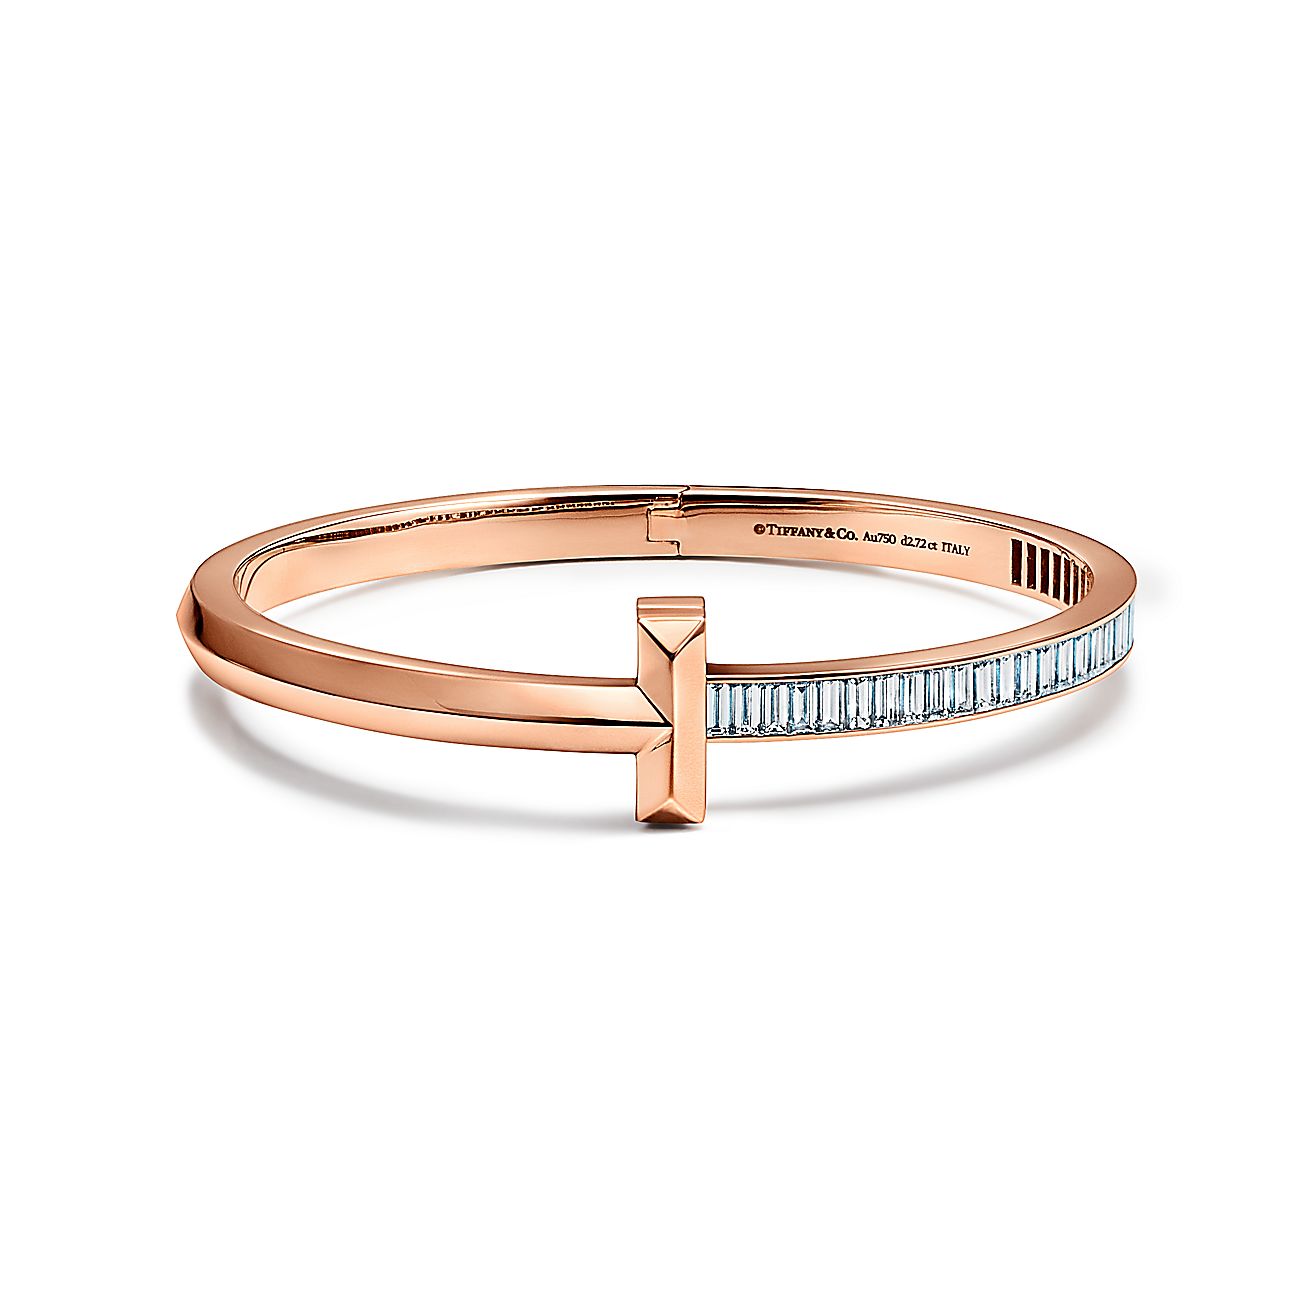 Tiffany & Co. Tiffany T Hinged Wire Bangle Bracelet